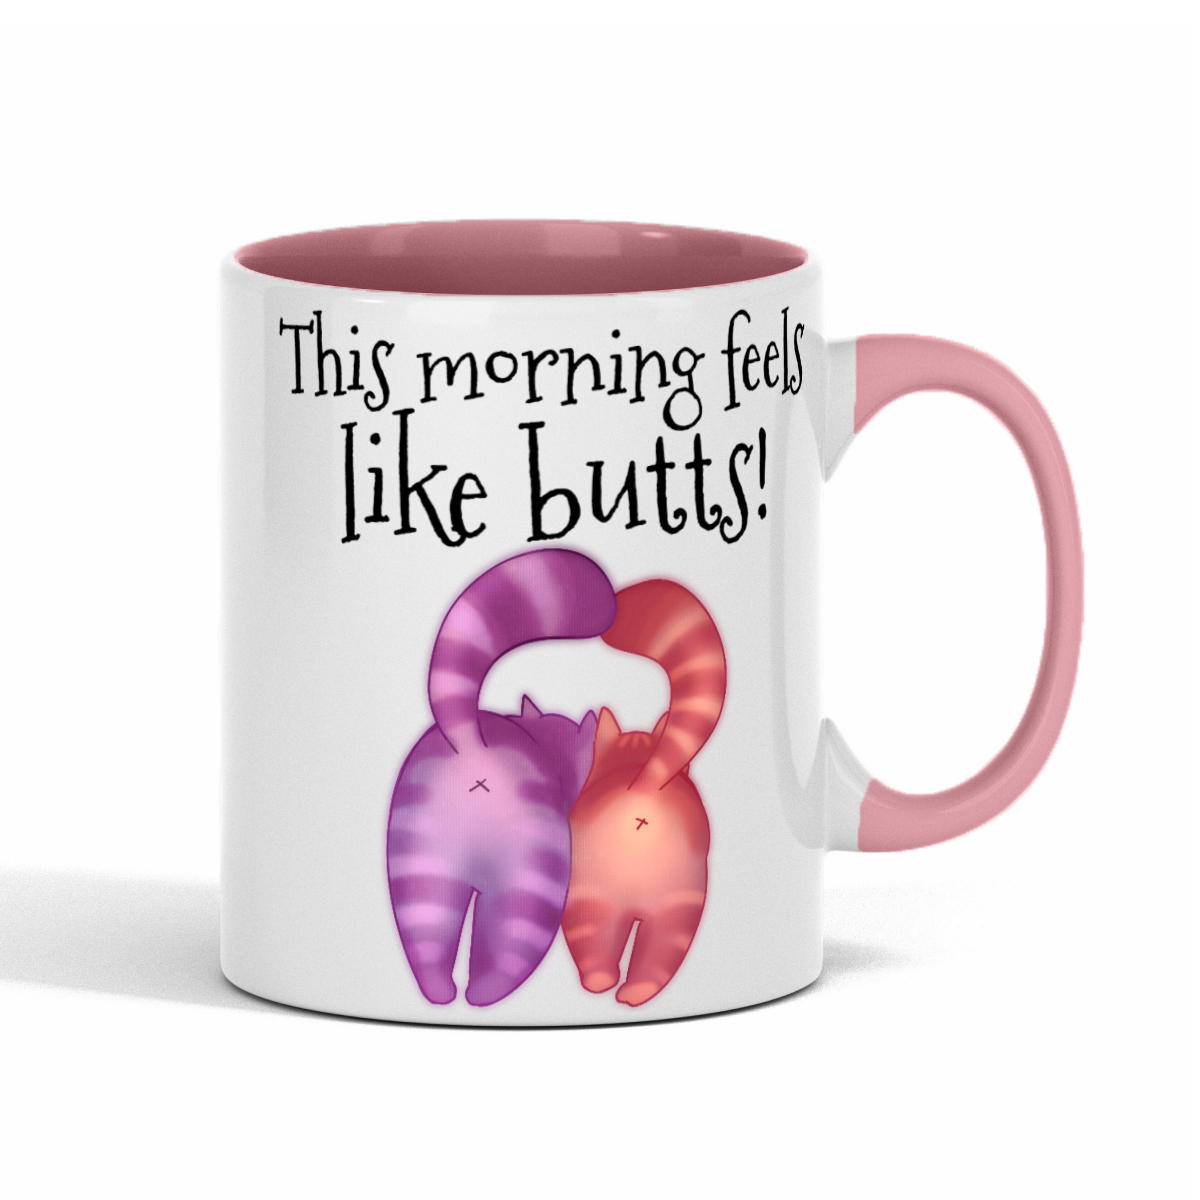 This morning feels like butts! 11 oz Mug